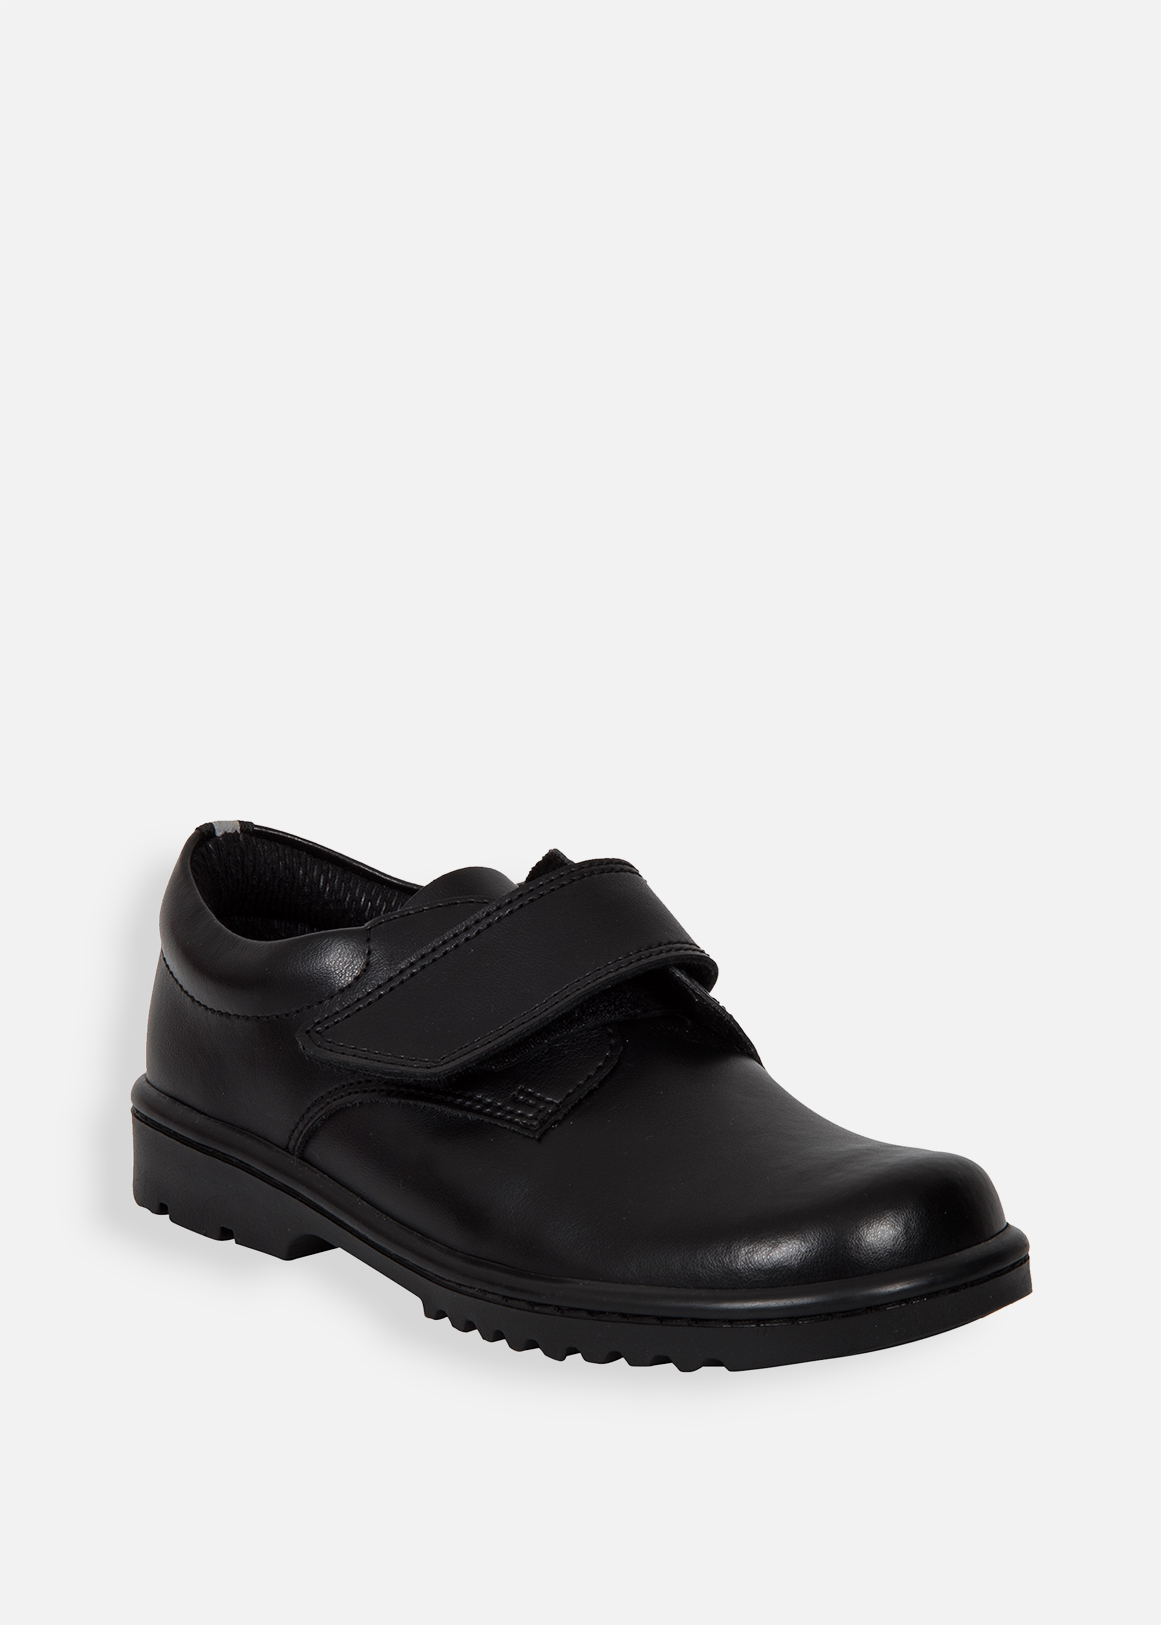 Black Leather School Shoes Size 8 1 Younger Boy BLACK 504172386 ?V=yI@h&o=eyJidWNrZXQiOiJ3dy1vbmxpbmUtaW1hZ2UtcmVzaXplIiwia2V5IjoiaW1hZ2VzL2VsYXN0aWNlcmEvcHJvZHVjdHMvaGVyby8yMDIyLTAzLTA0LzUwNDE3MjM4Nl9CTEFDS19oZXJvLmpwZyJ9&